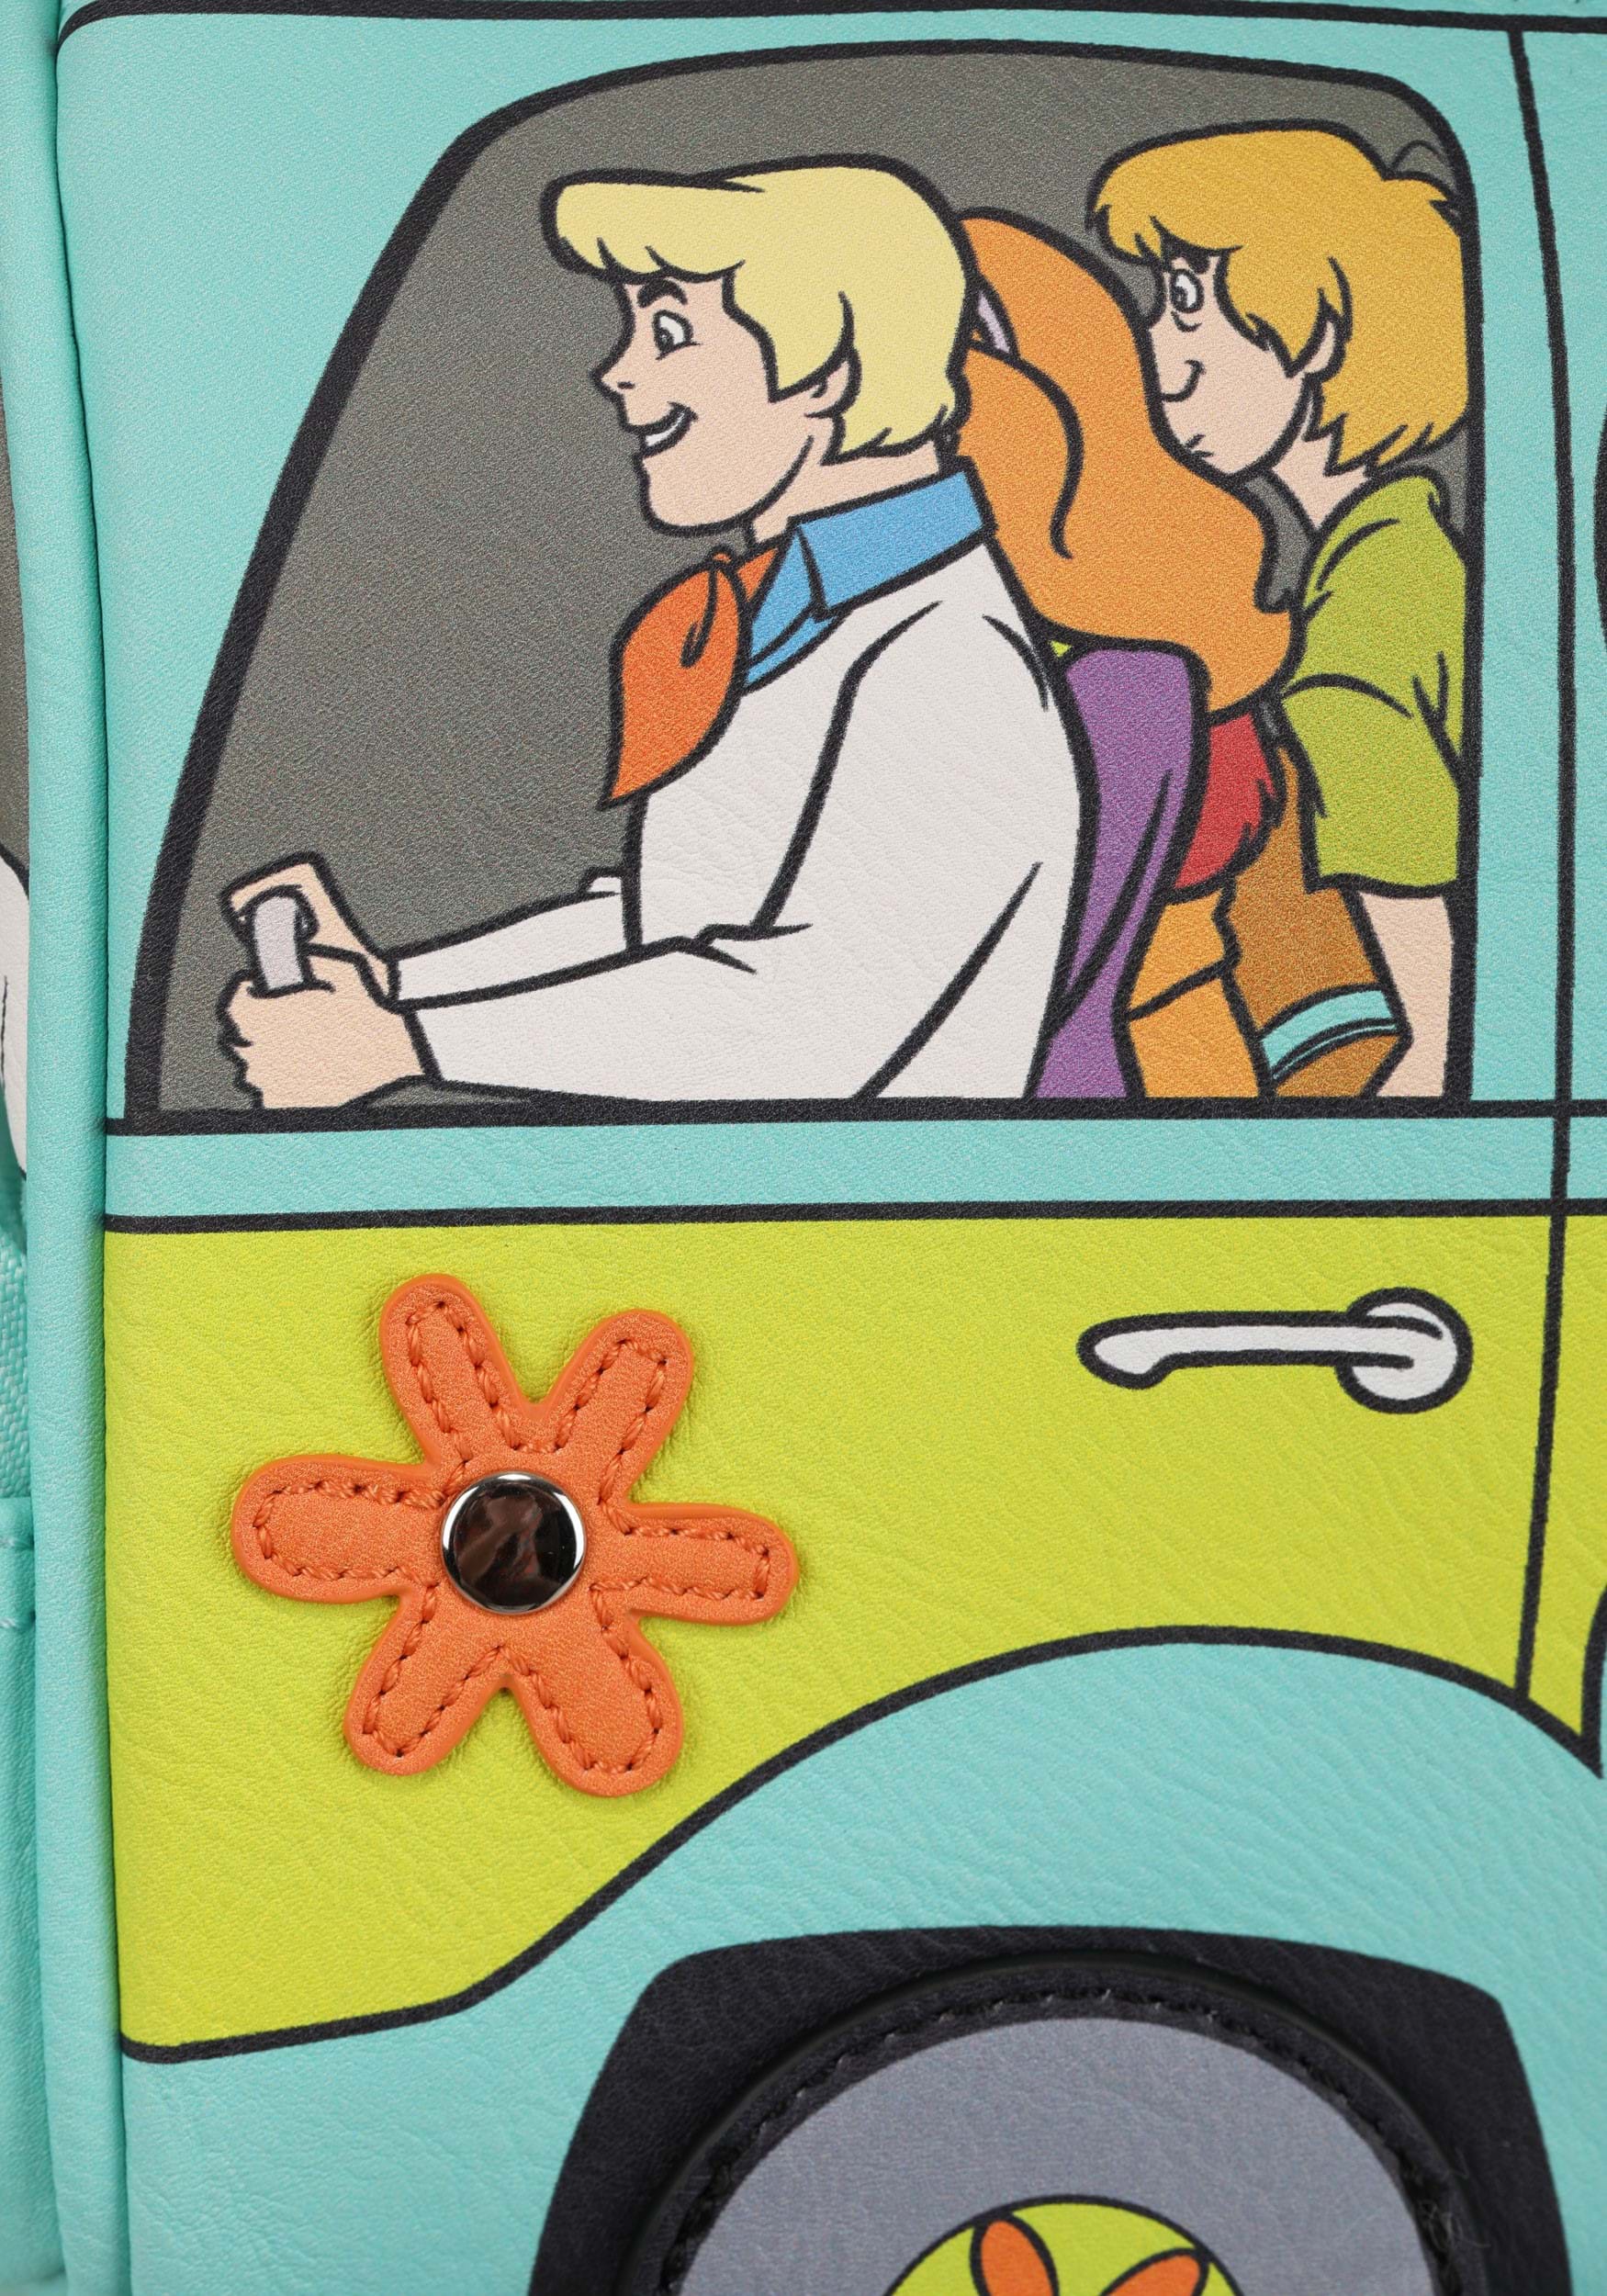 Scooby Doo Mystery Machine Crossbody Bag by Loungefly